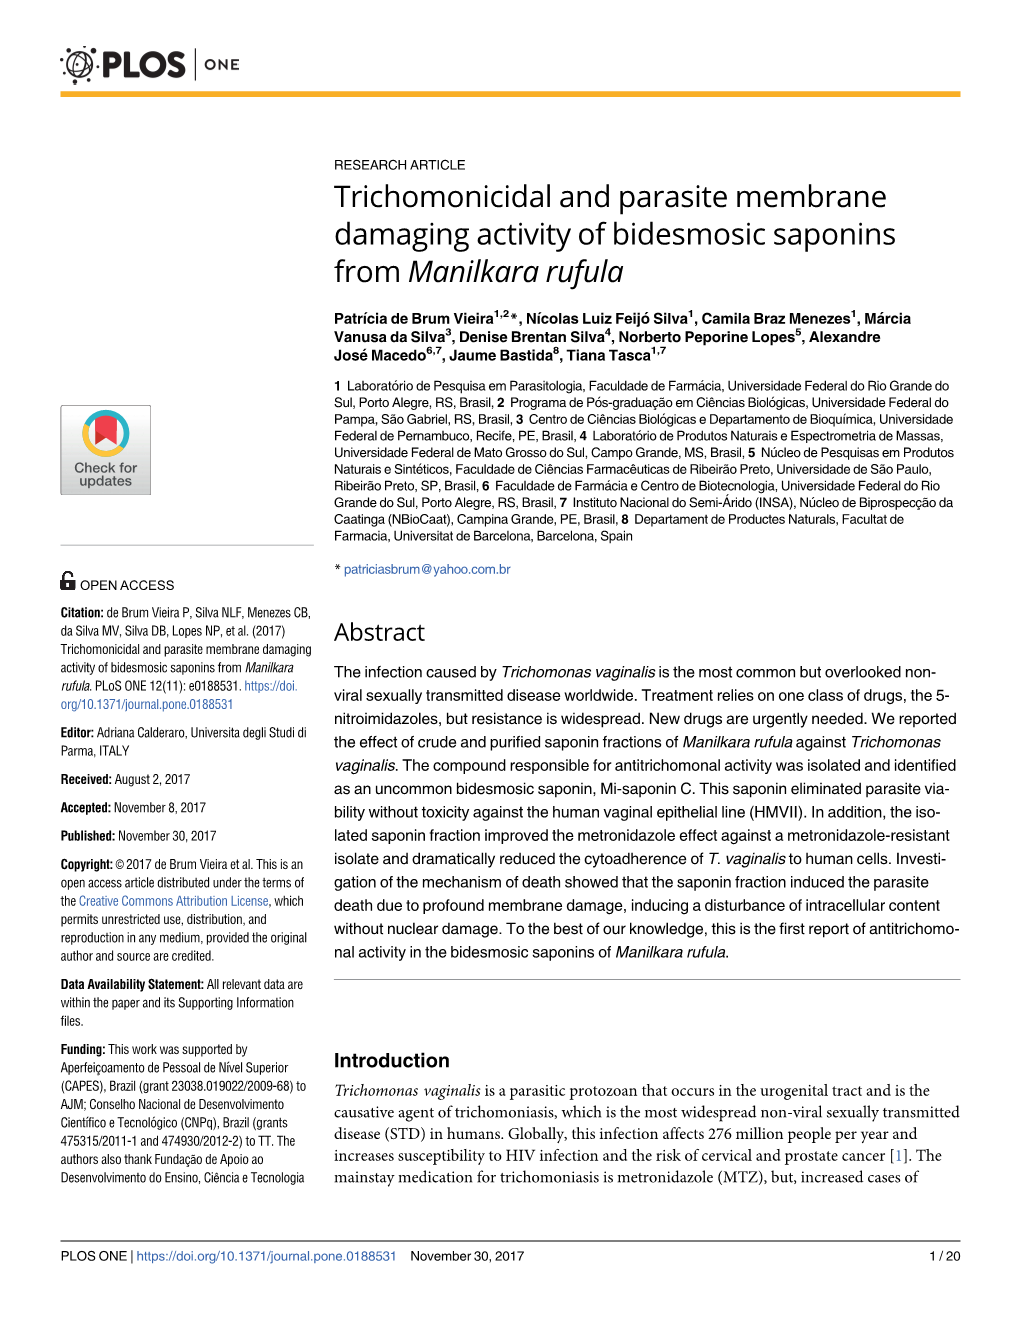 Trichomonicidal and Parasite Membrane Damaging Activity of Bidesmosic Saponins from Manilkara Rufula